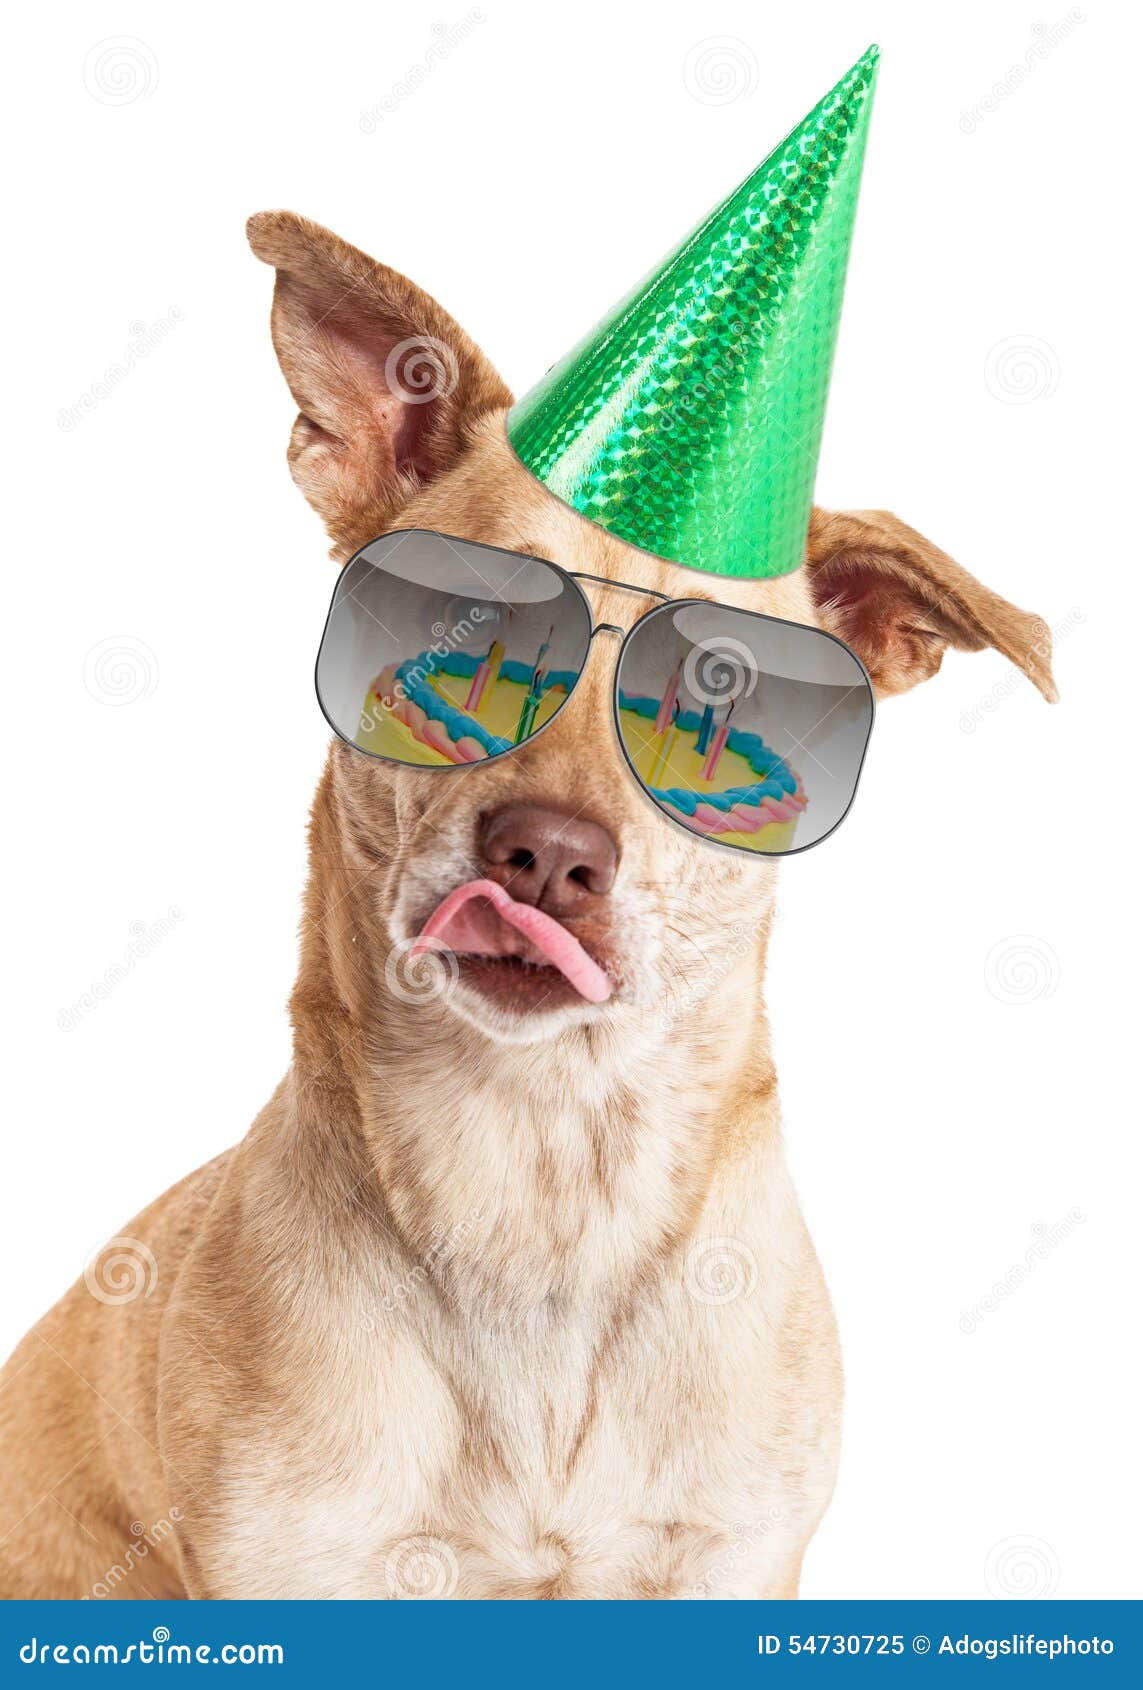 Funny Dog Birthday Cake Reflection Stock Image - Image of birthday ...